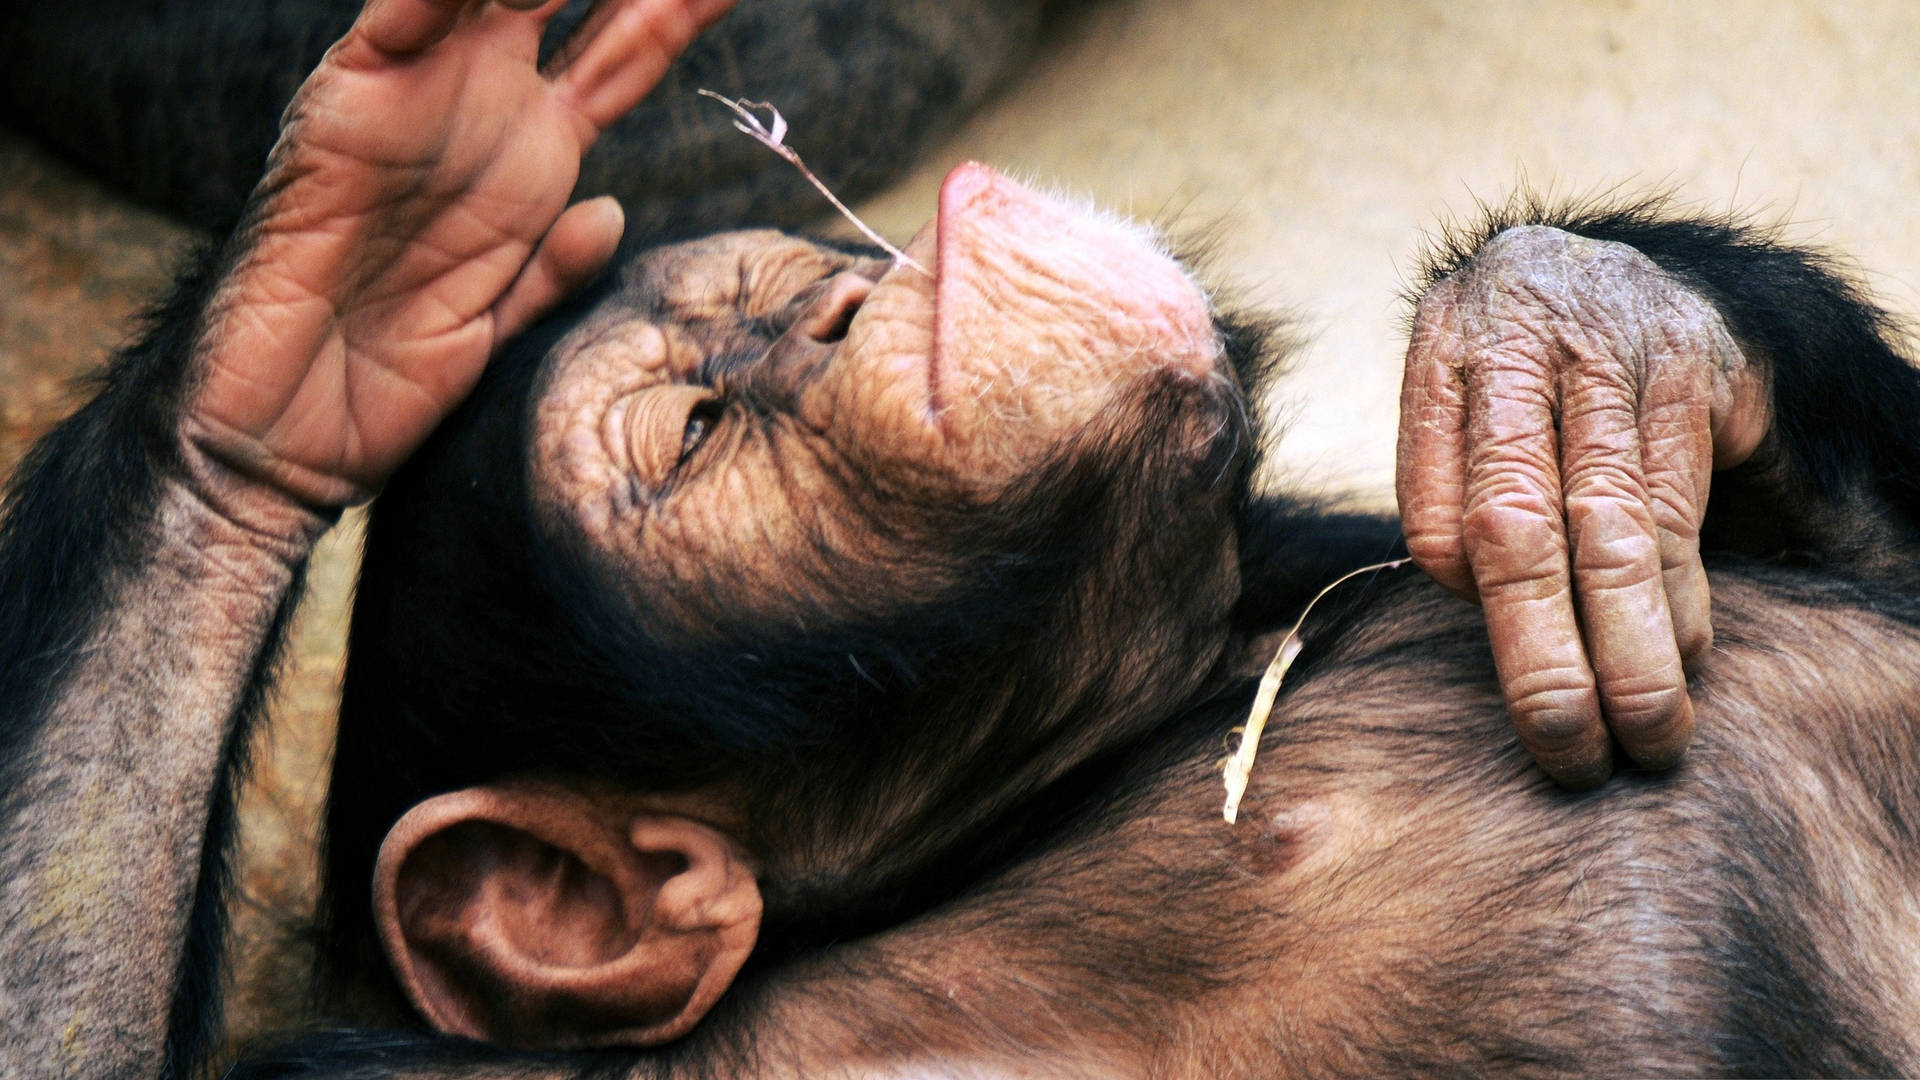 Peaceful Sleeping Chimpanzee Background